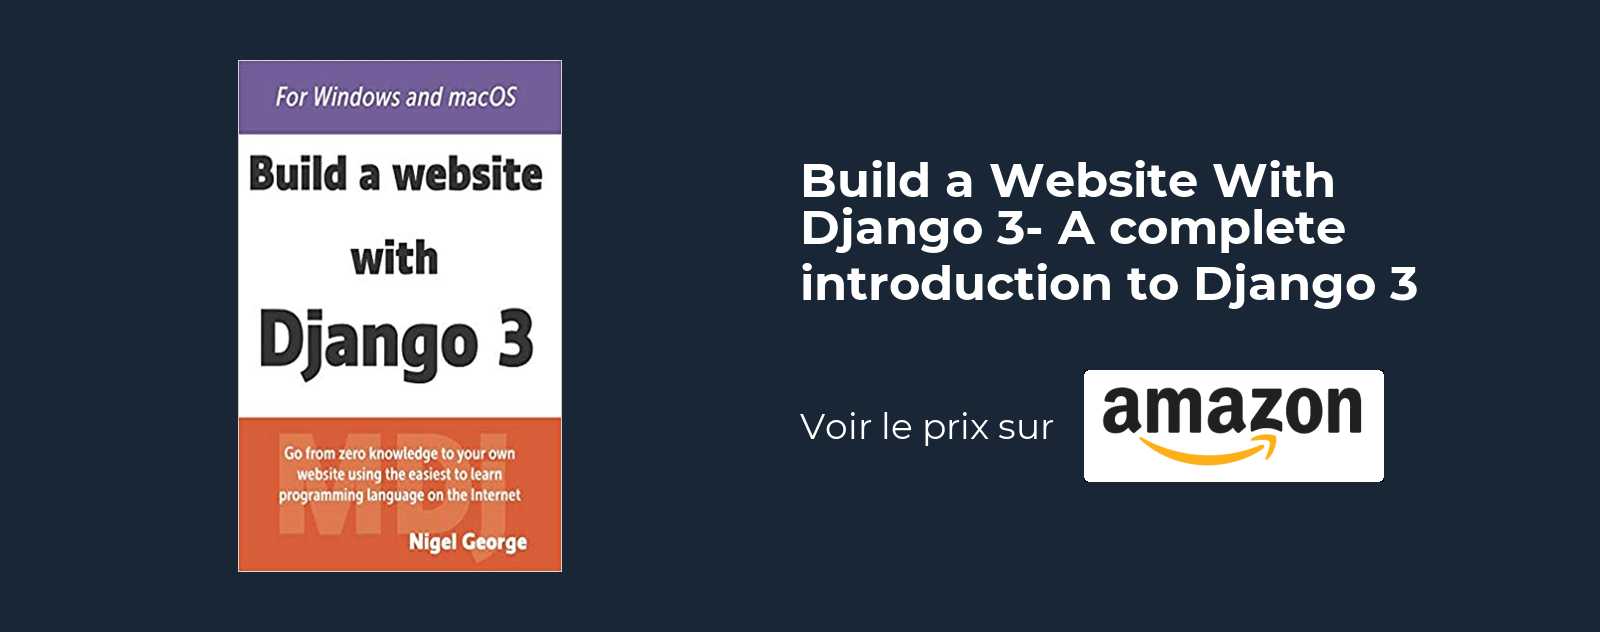 Build a Website With Django 3- A complete introduction to Django 3